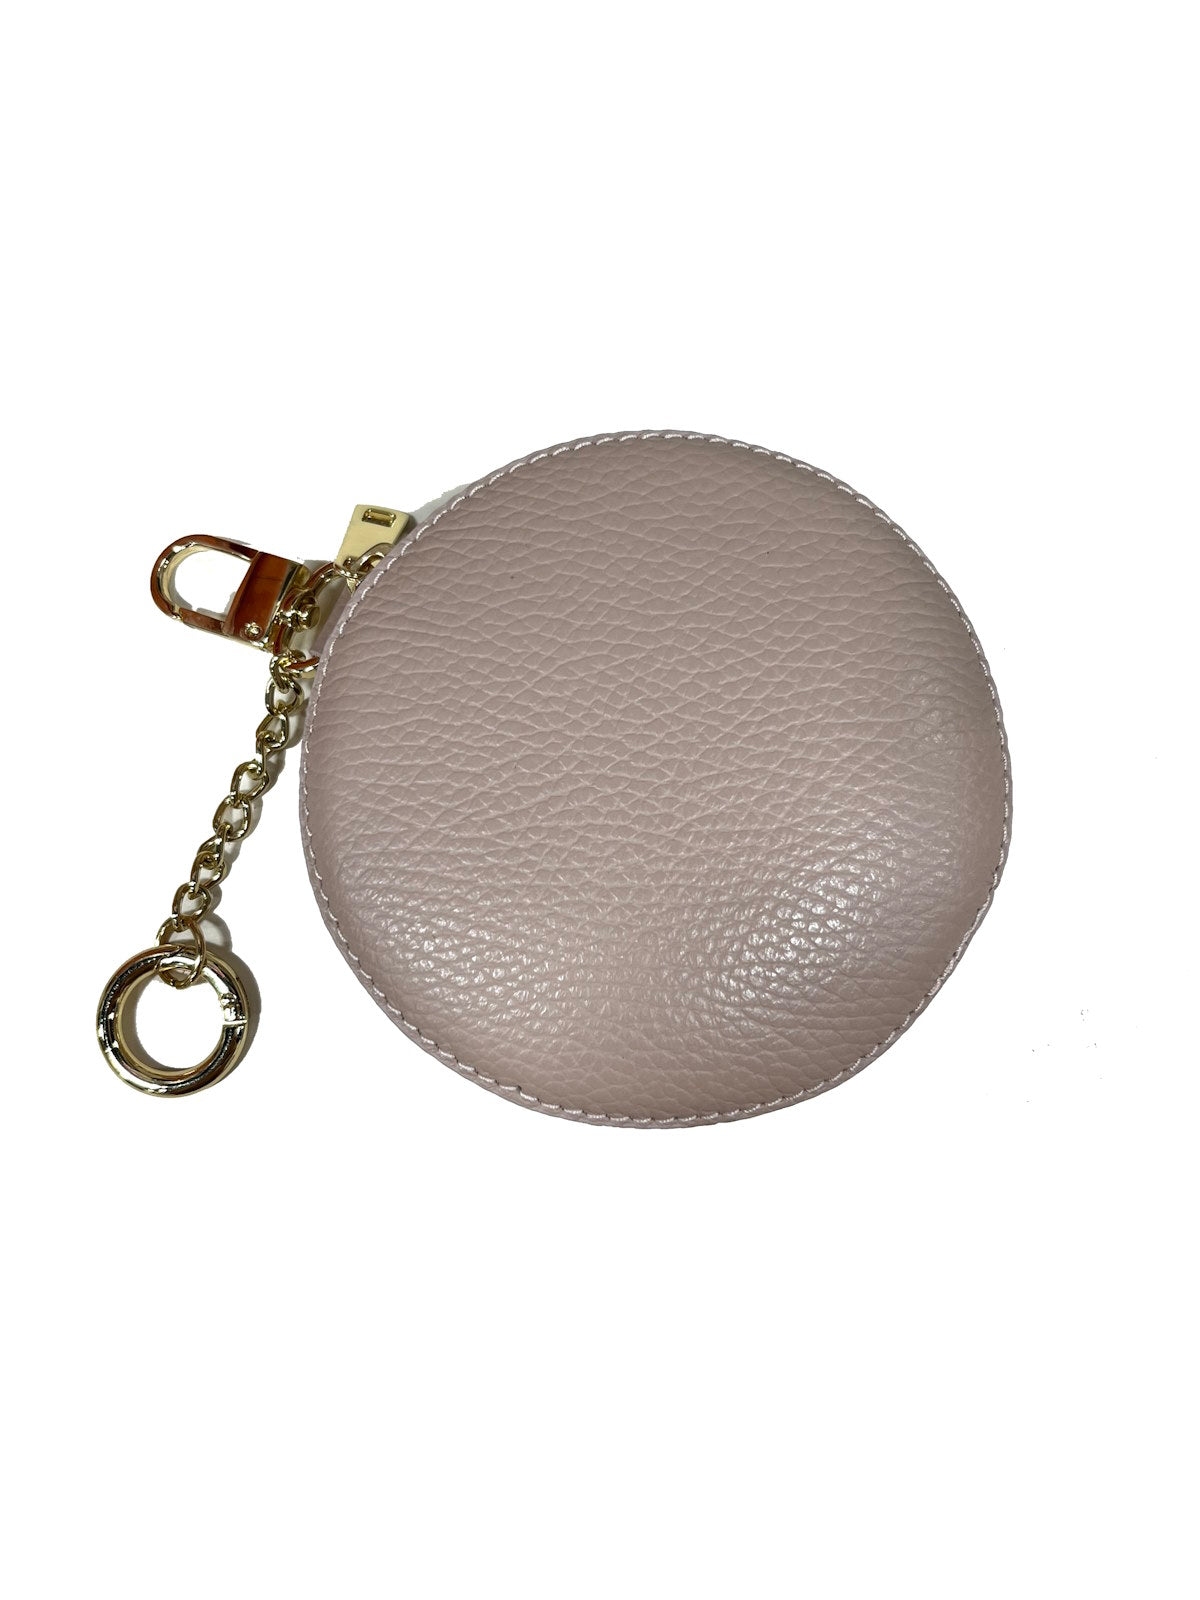 Genuine leather detachable purse with key holder, art. 342701.342